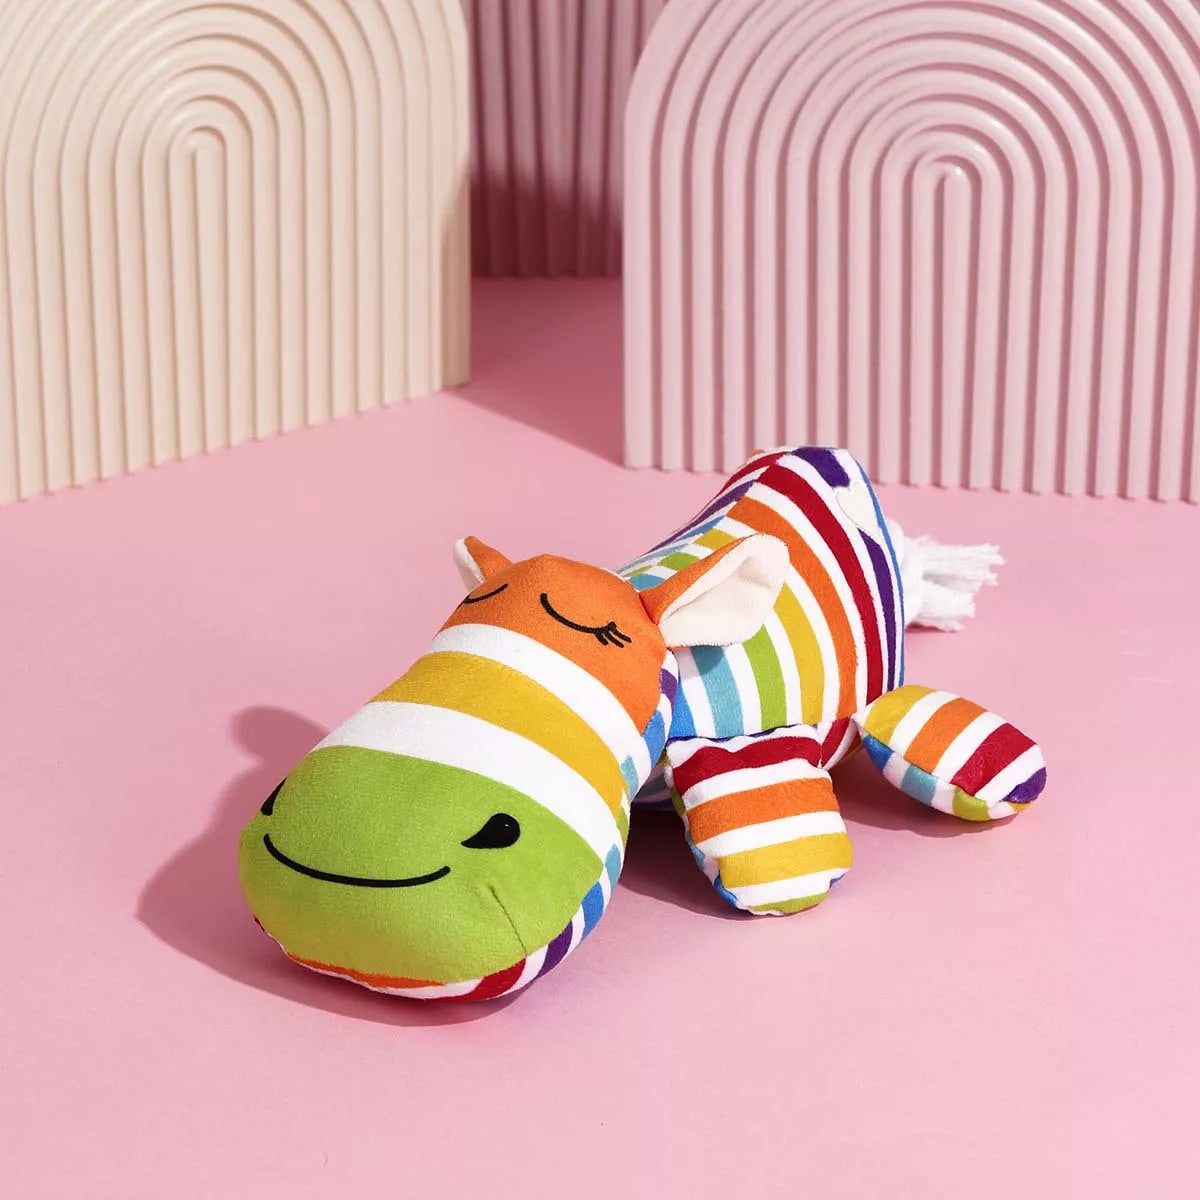 Hailey The Hippo - Rainbow Squeaker Pet Toy - Rainbow - Dog Toys - Lines & Nines